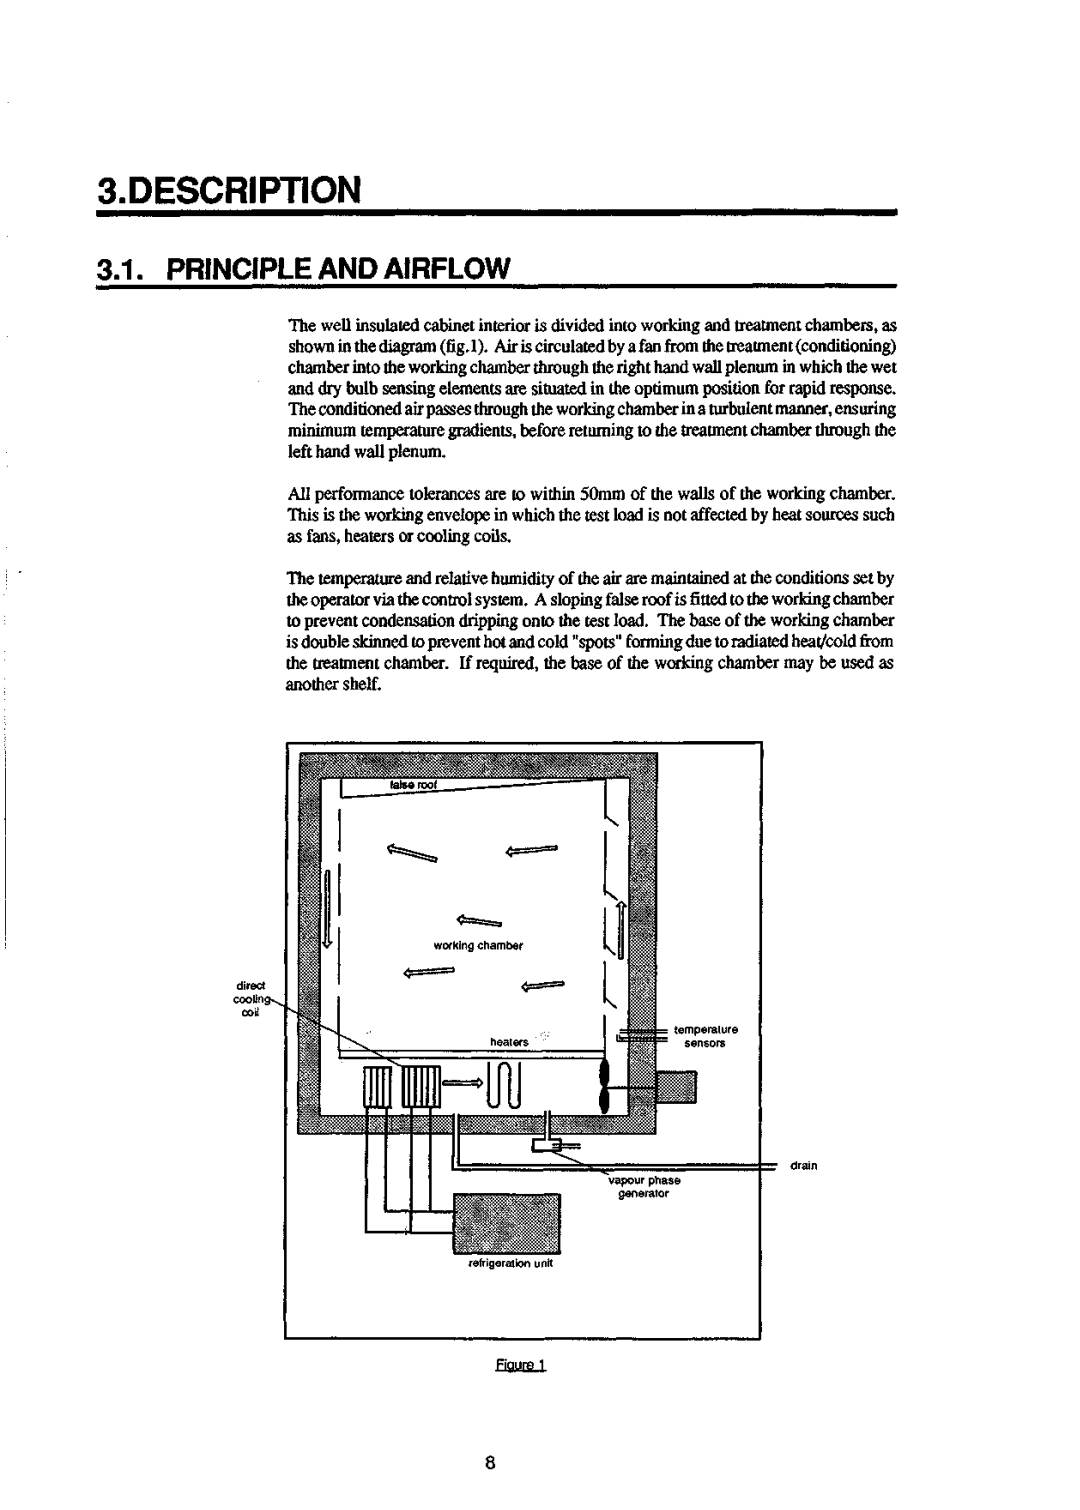 Sanyo 550 instruction manual DESCRIPTI0N, Principle and Airflow 